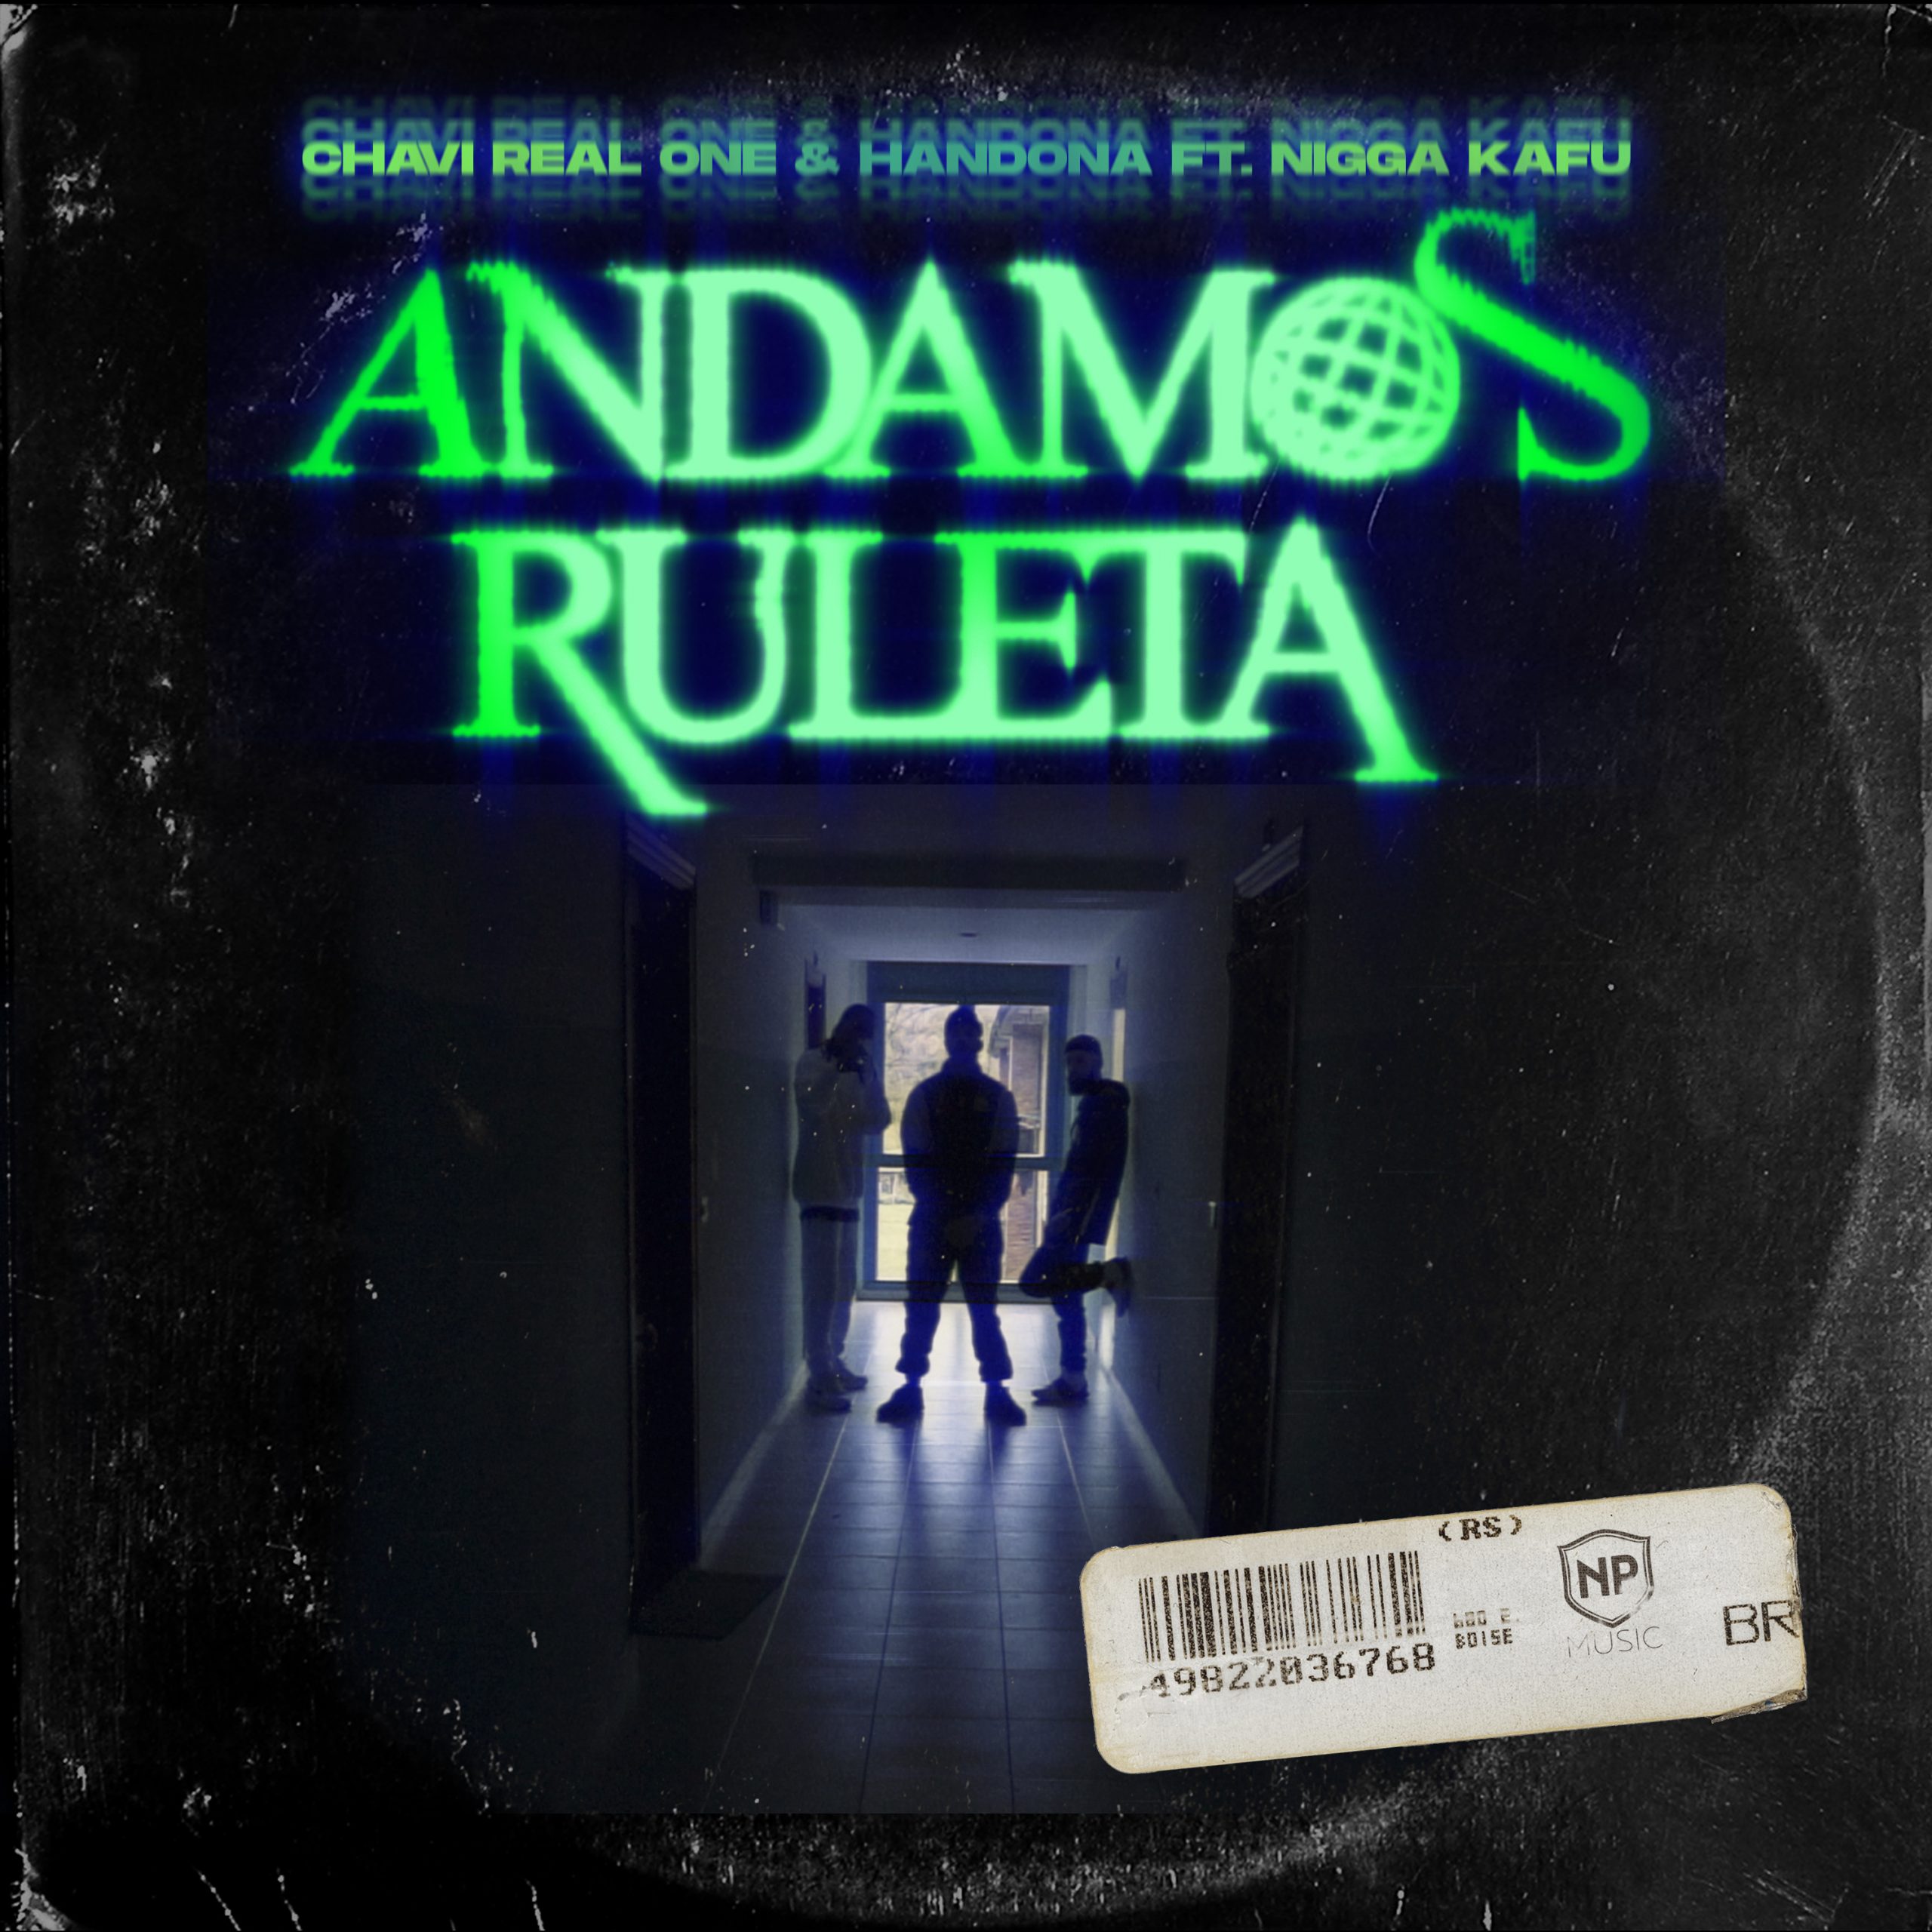 Chavi Real One & Handona Ft. Nigga Kafu lanzan "Andamos Ruleta"